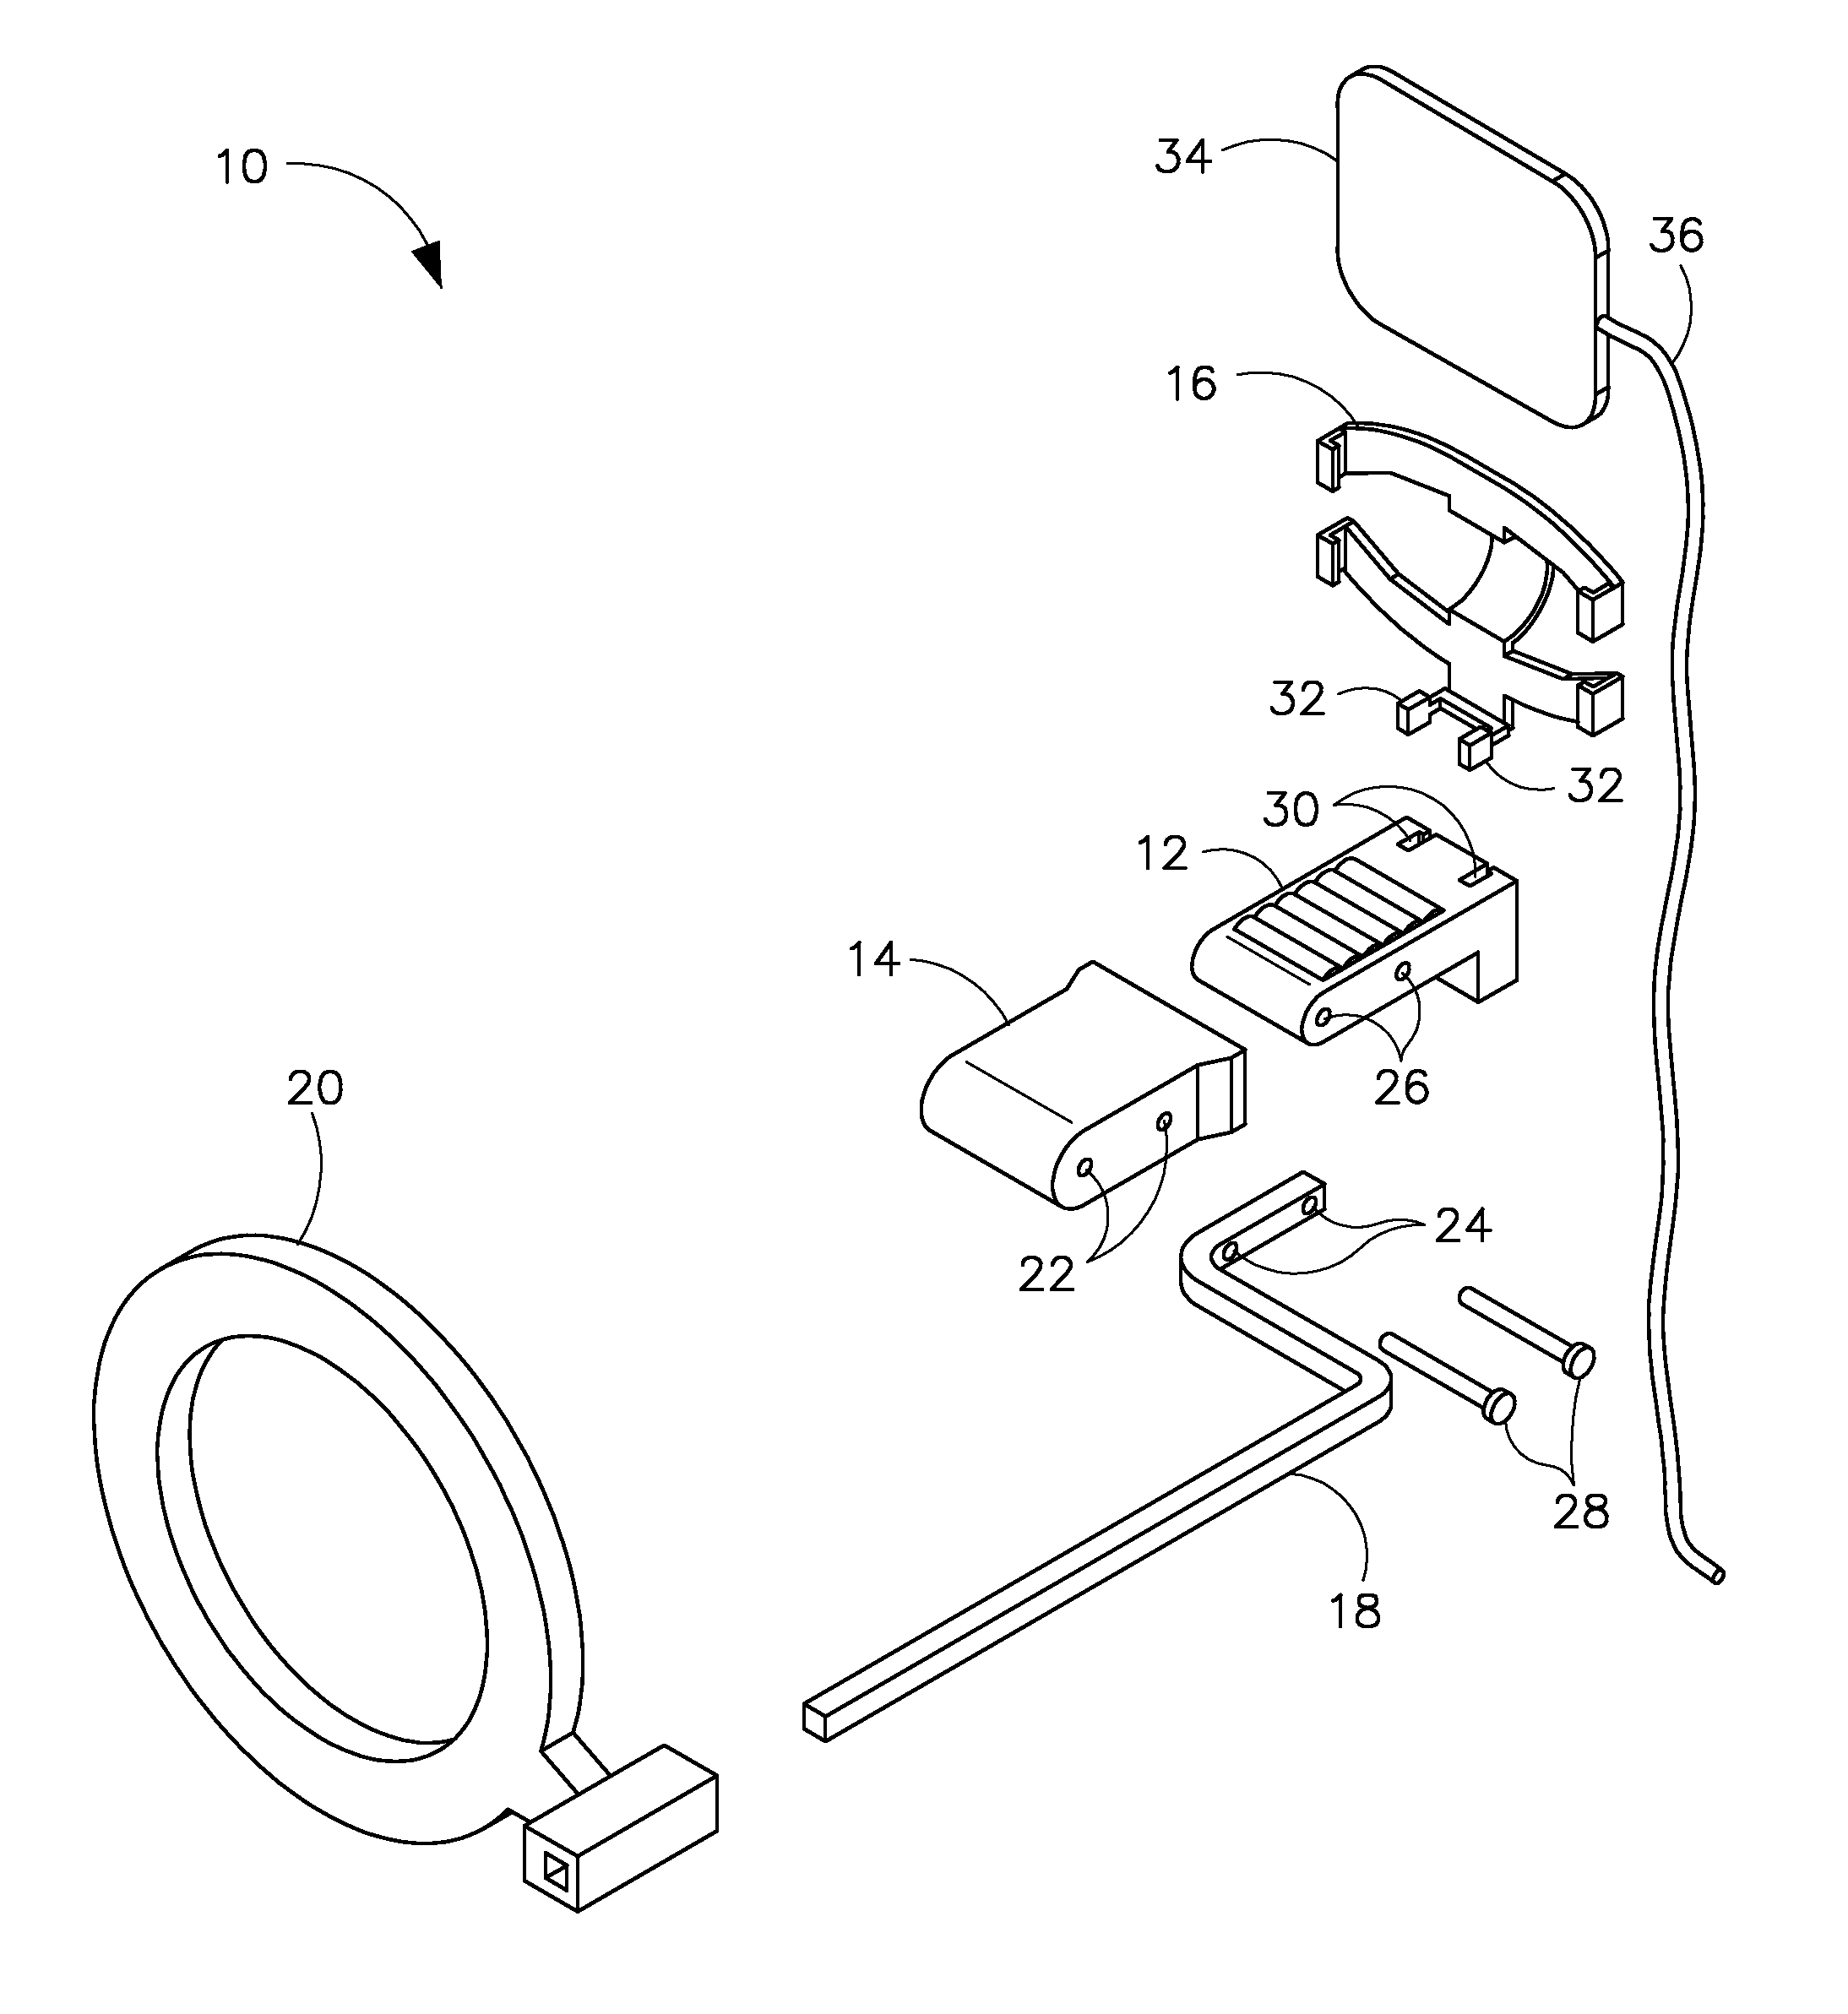 Apparatus for holding digital dental x-ray sensor and method of making same